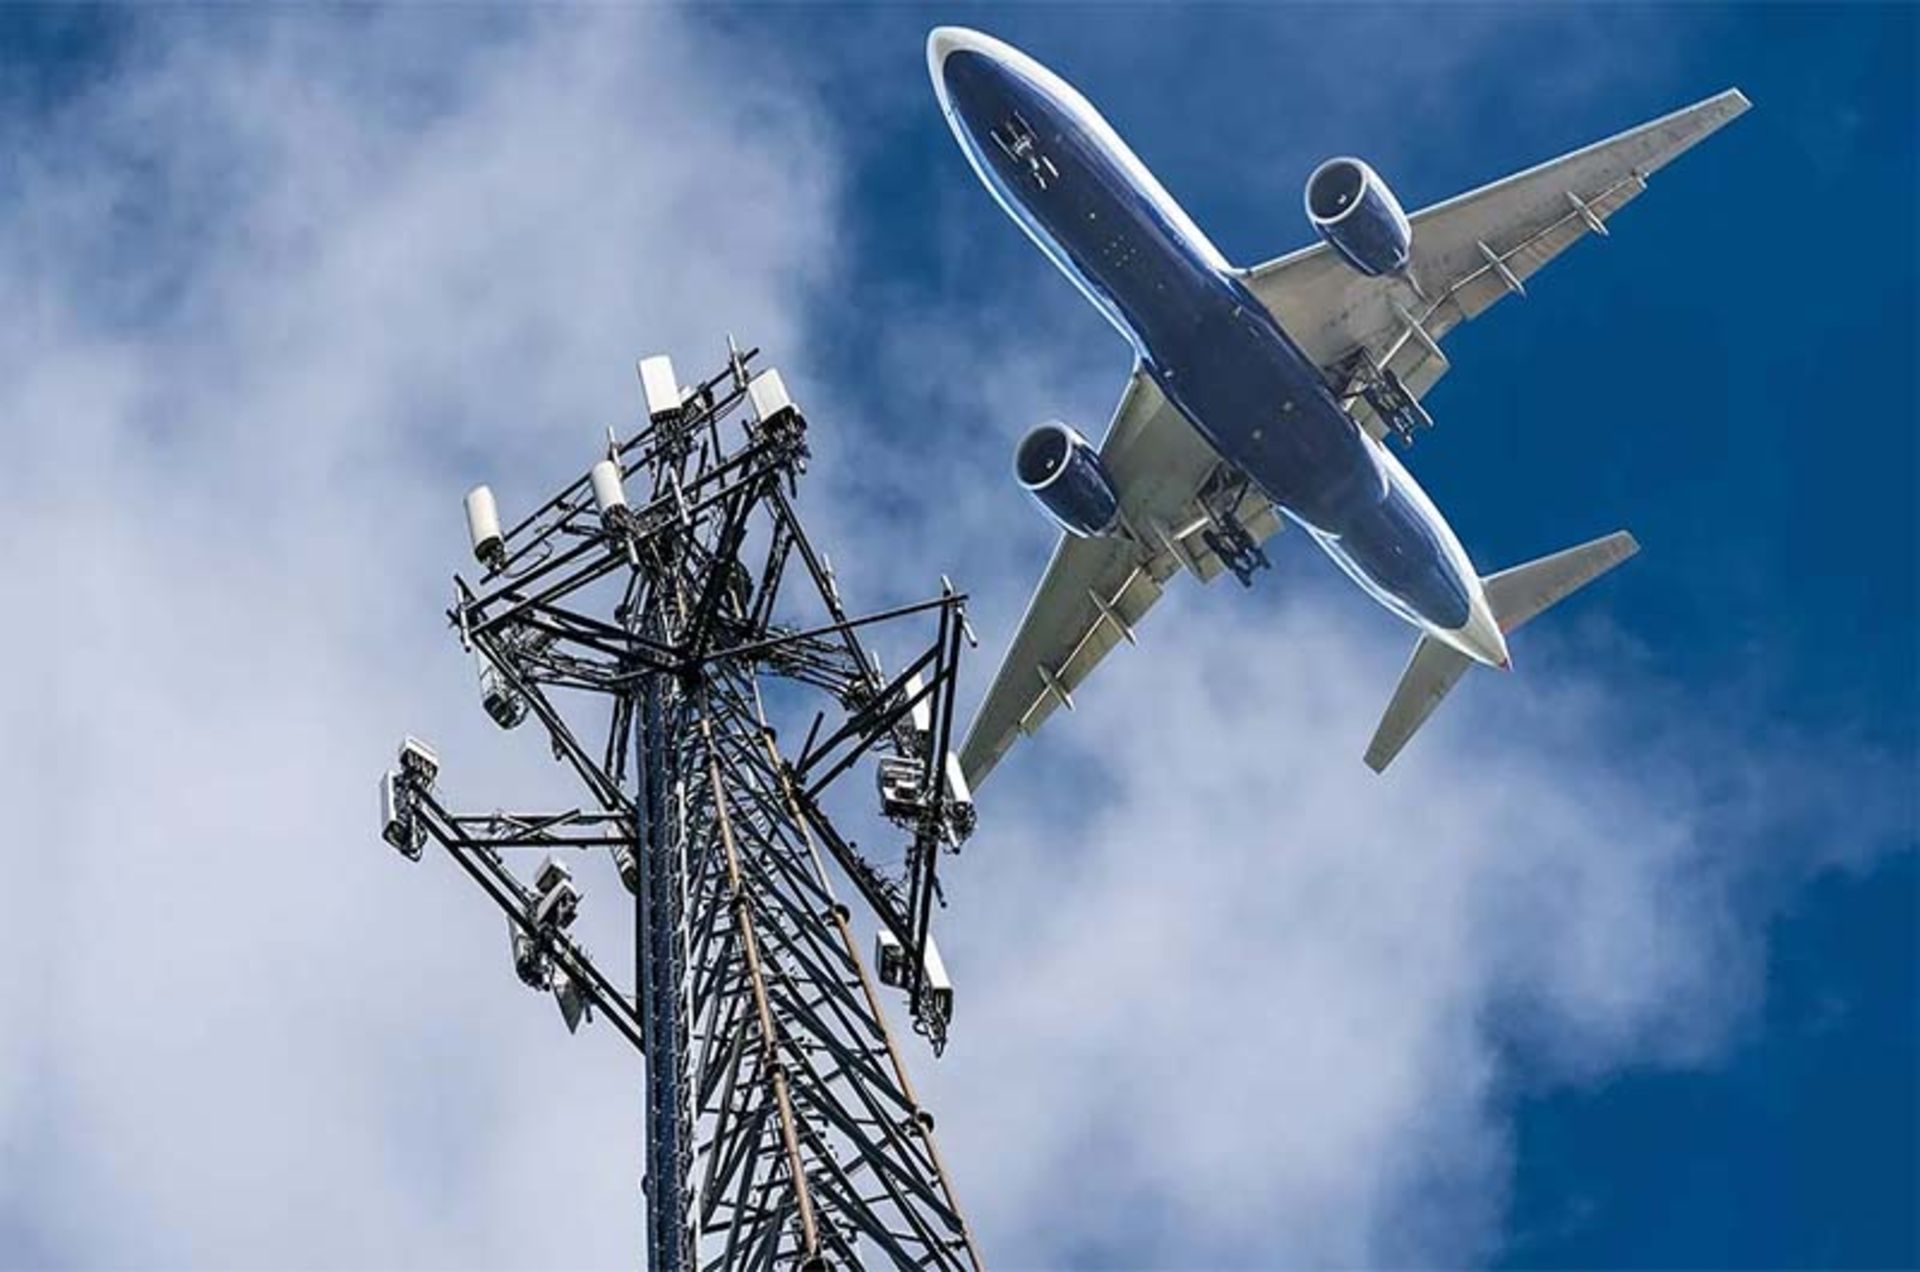 An airplane flies over a telecommunication tower.